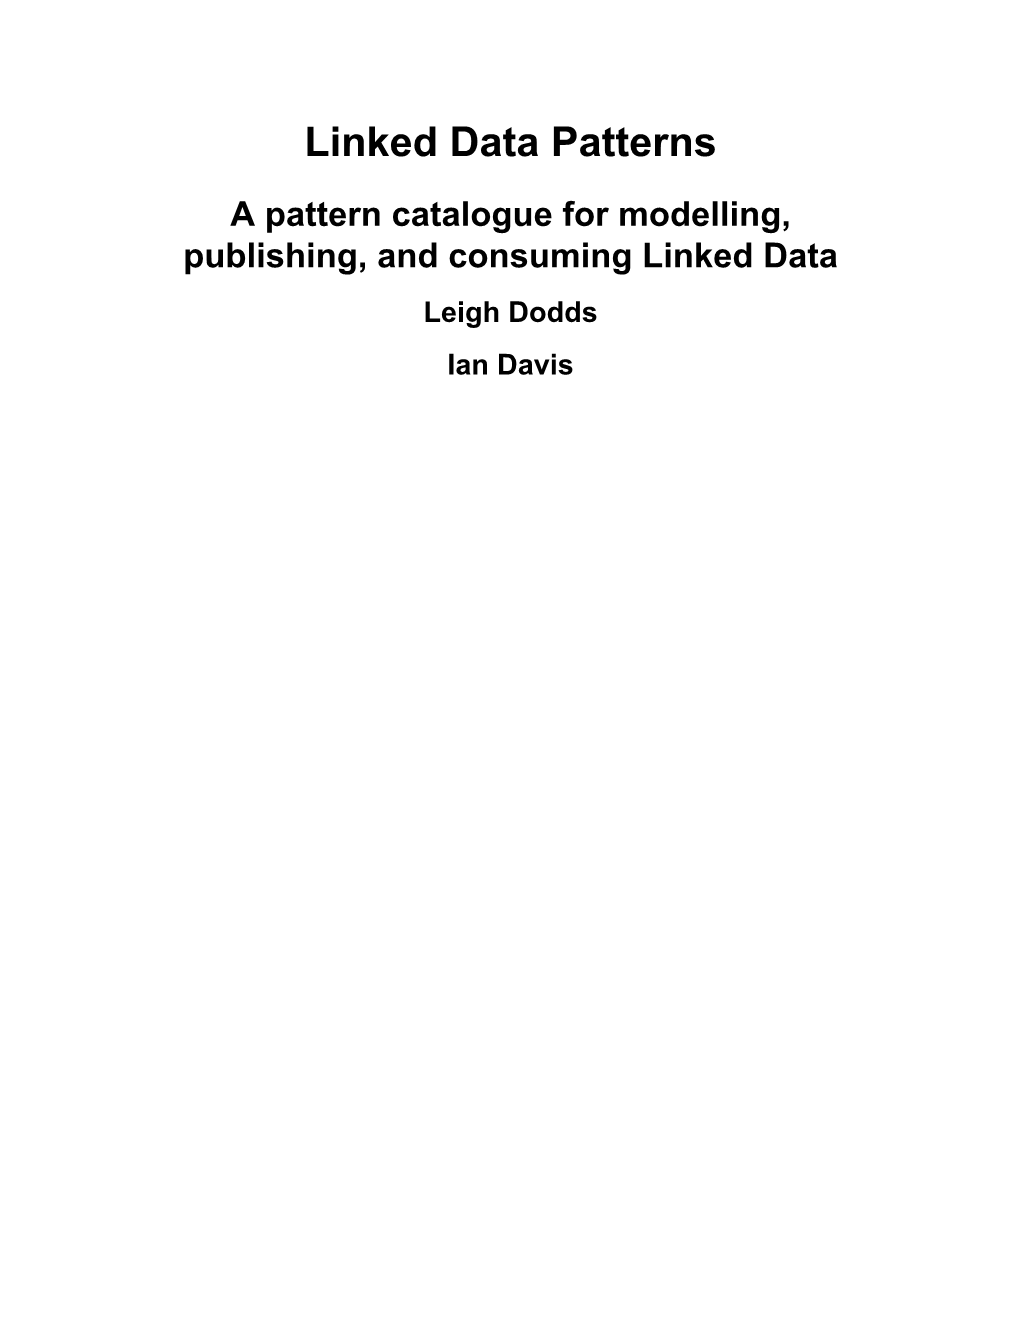 Linked Data Patterns (PDF)